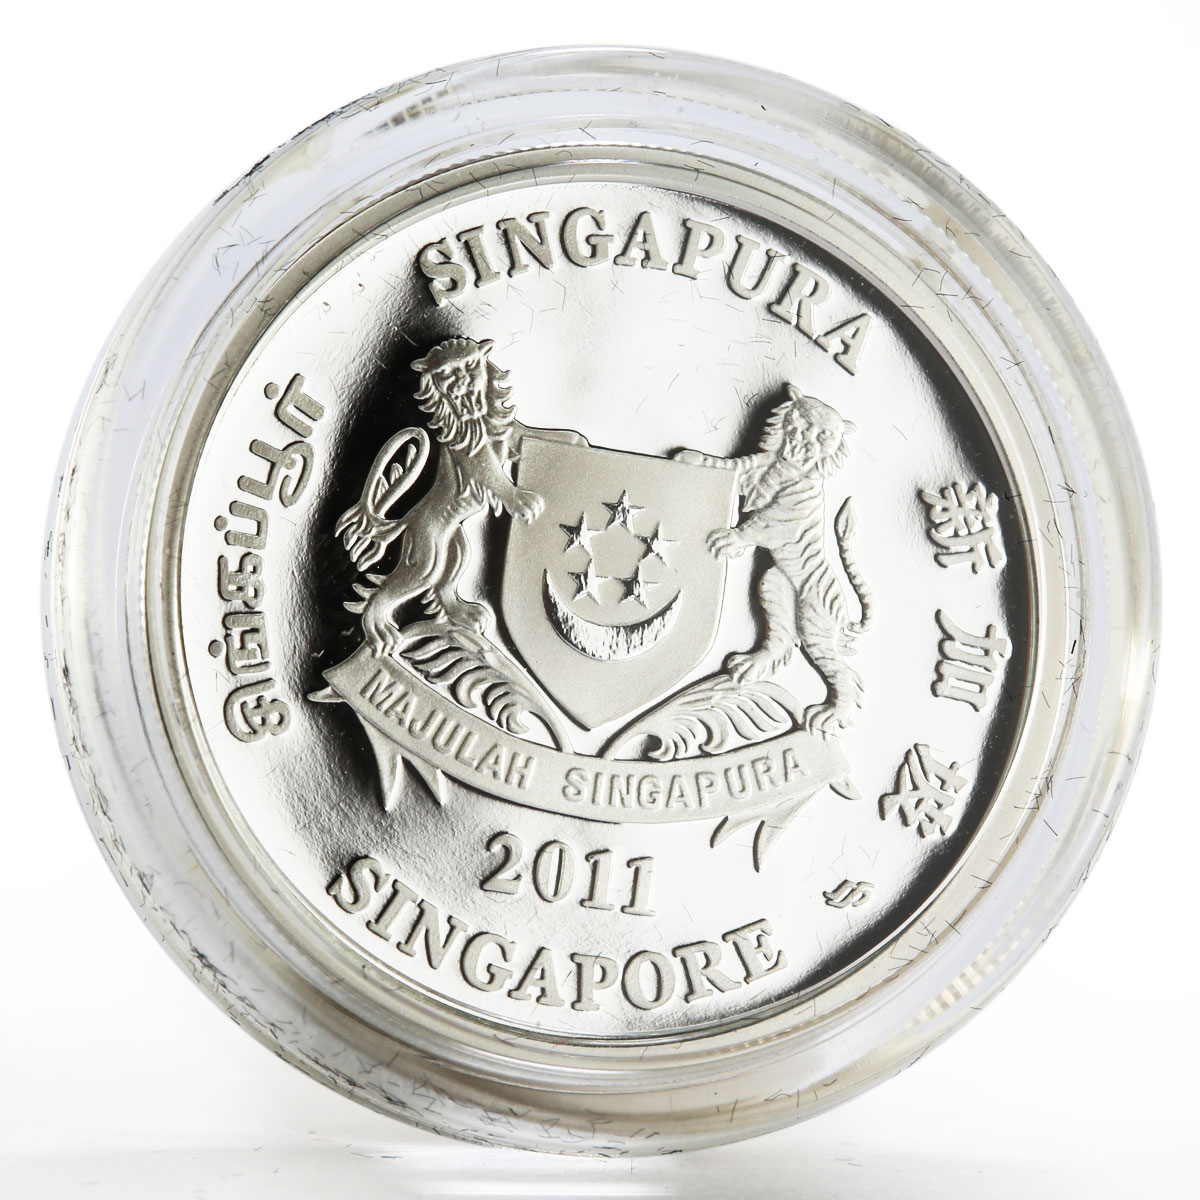 Singapore 1 dollar Aranda Majula Orchid colored proof silver coin 2011